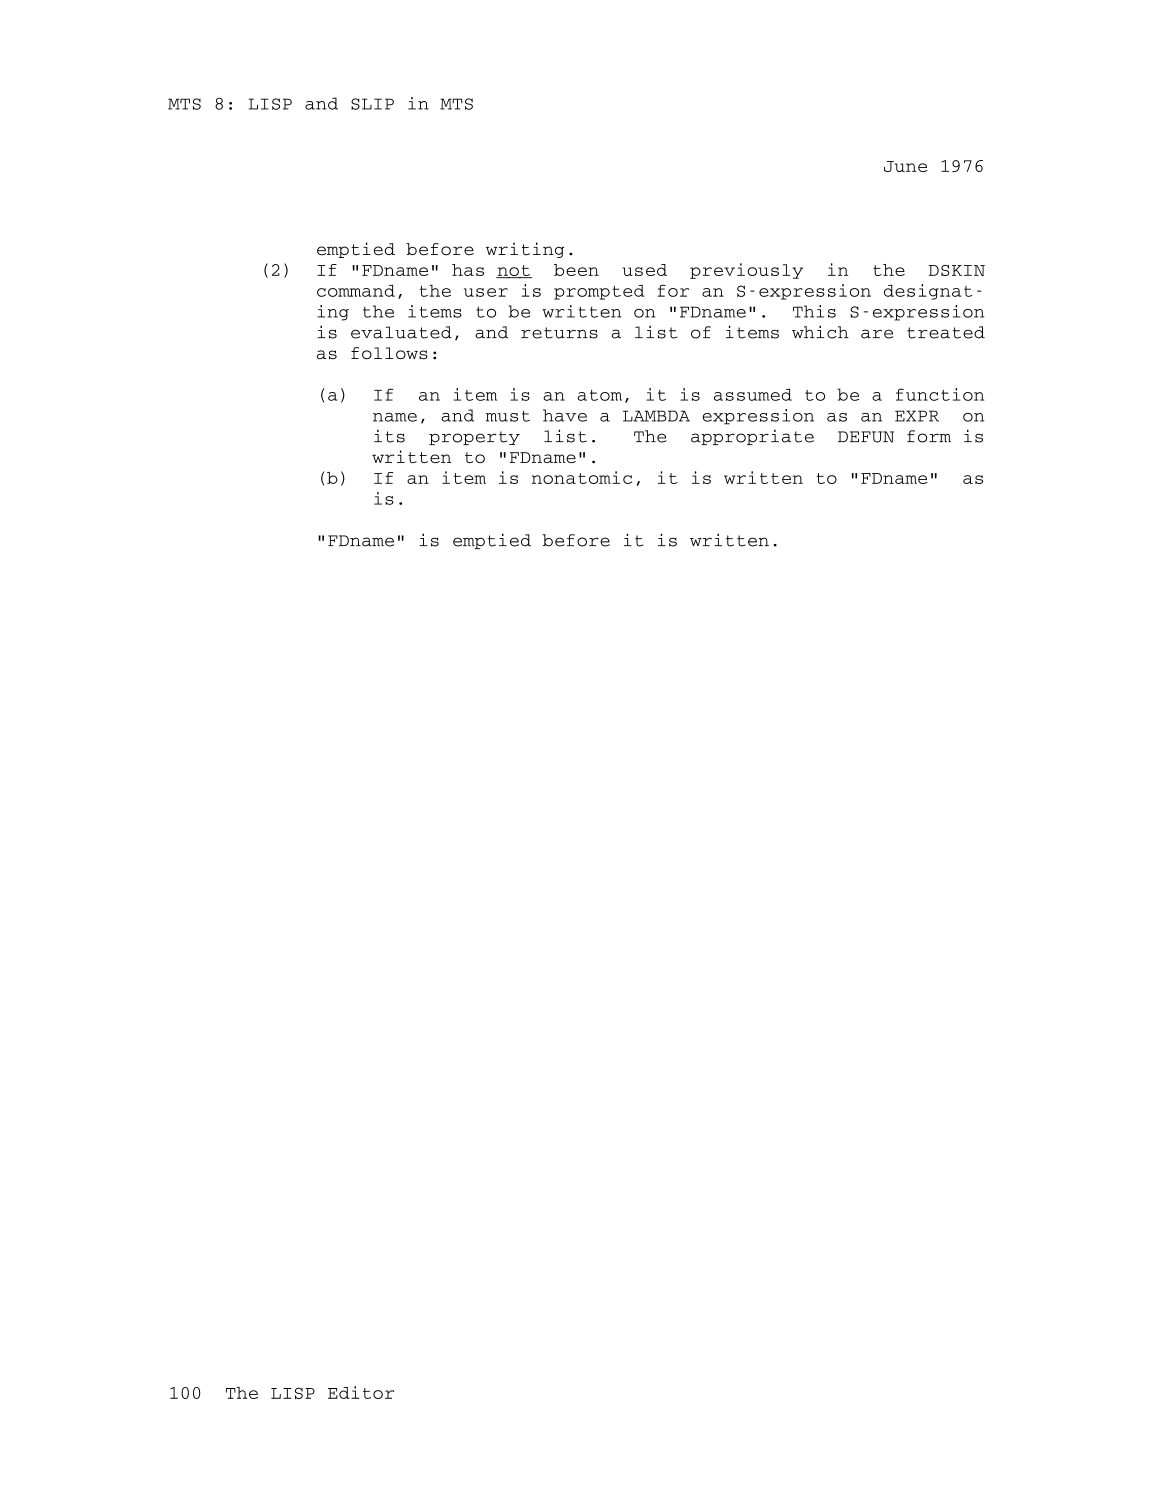 MTS Volume 8 - LISP and SLIP page 100